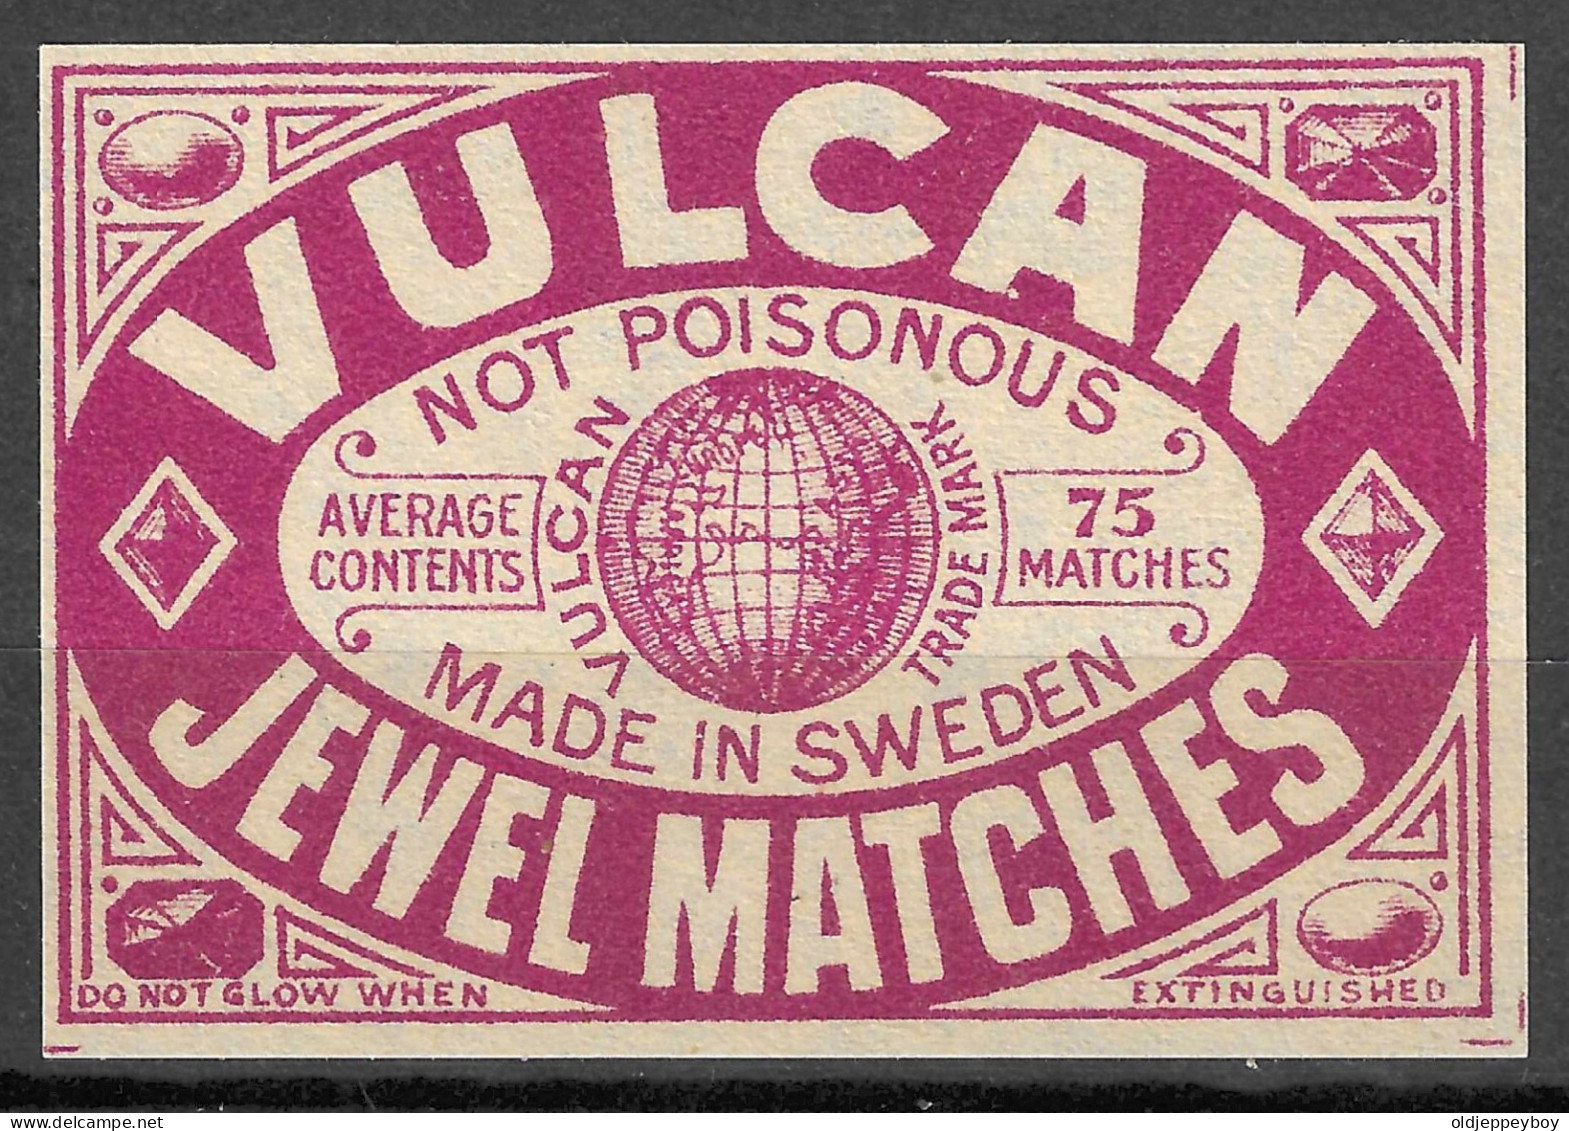  MADE  IN SWEDEN   VINTAGE Phillumeny MATCHBOX LABEL VULCAN JEWEL MATCHES  6.5  X 4.5 CM  RARE - Matchbox Labels